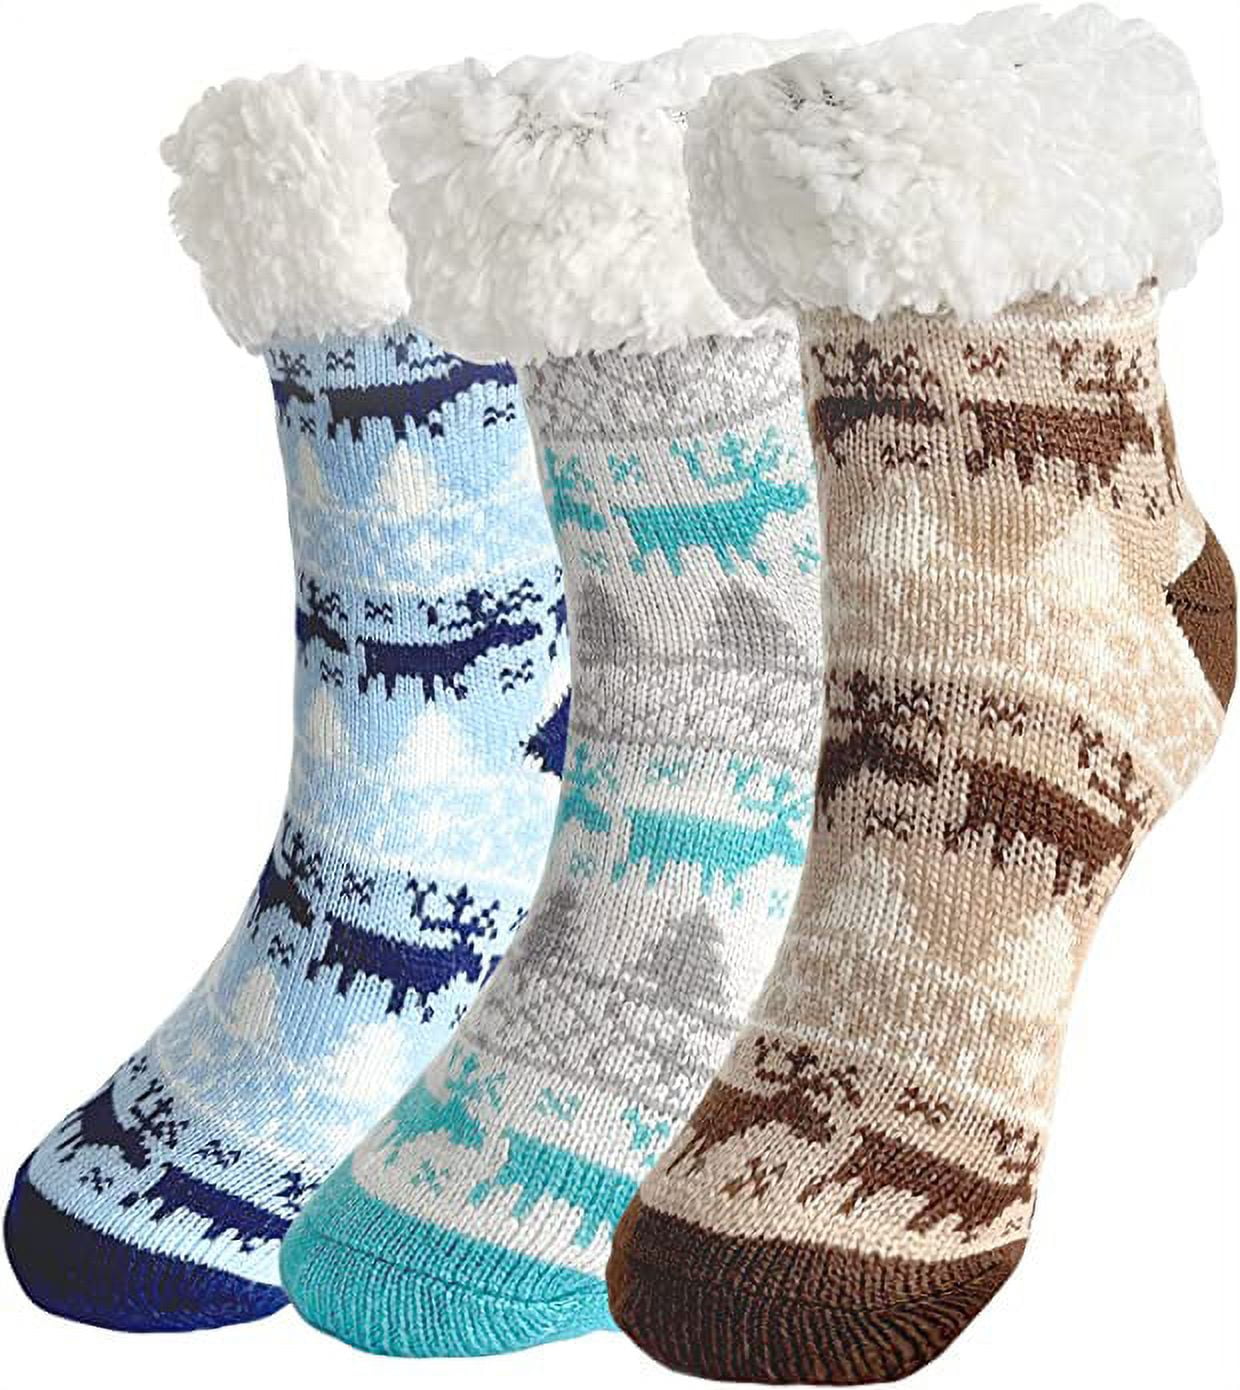 DivanTree 3 Pairs Christmas Fuzzy Socks for Women Non Skid